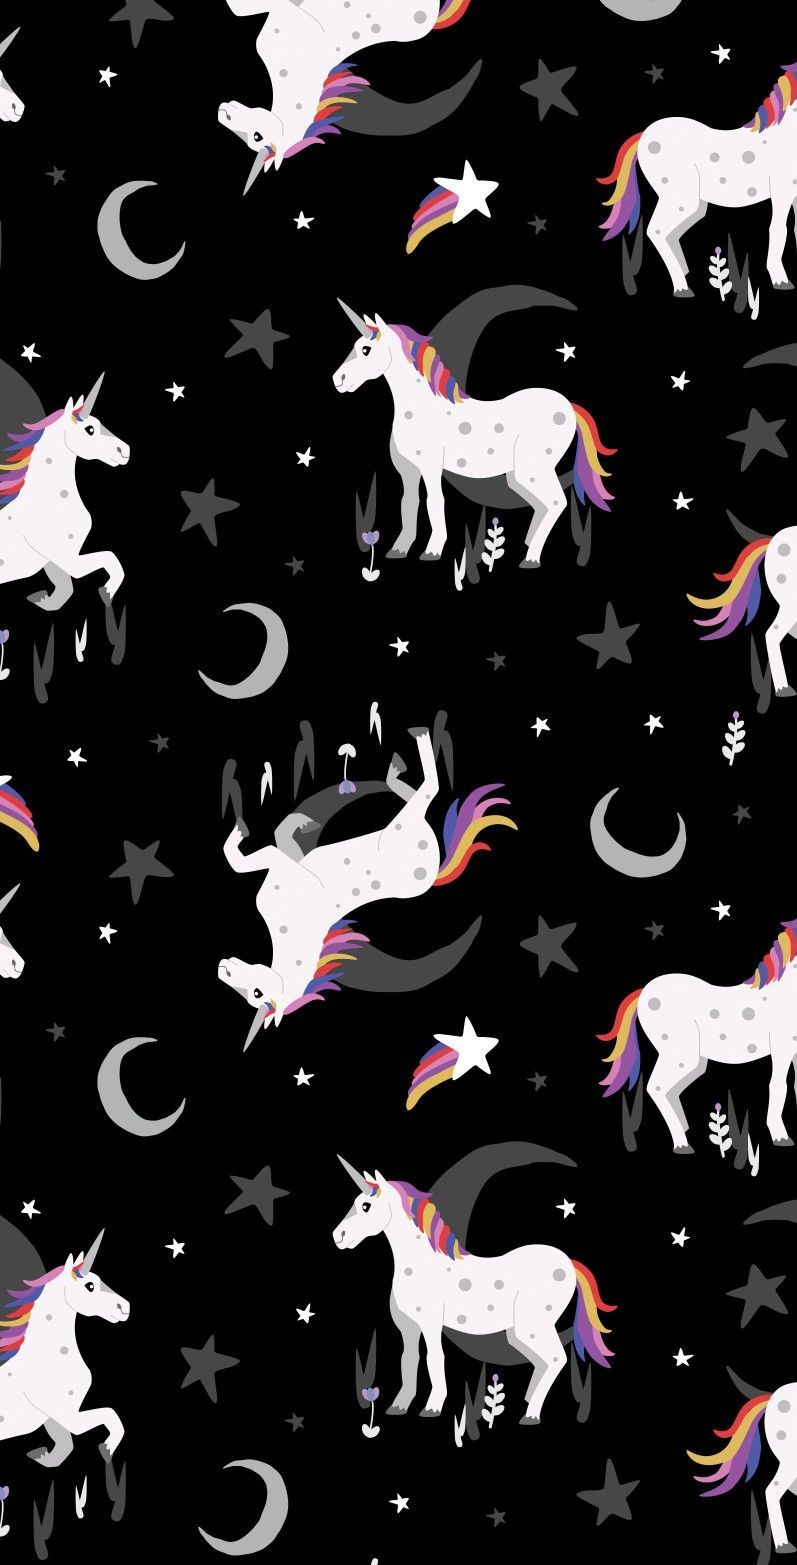 Pin on unicorns. Unicorn wallpaper cute, iPhone wallpaper unicorn, Pink unicorn wallpaper